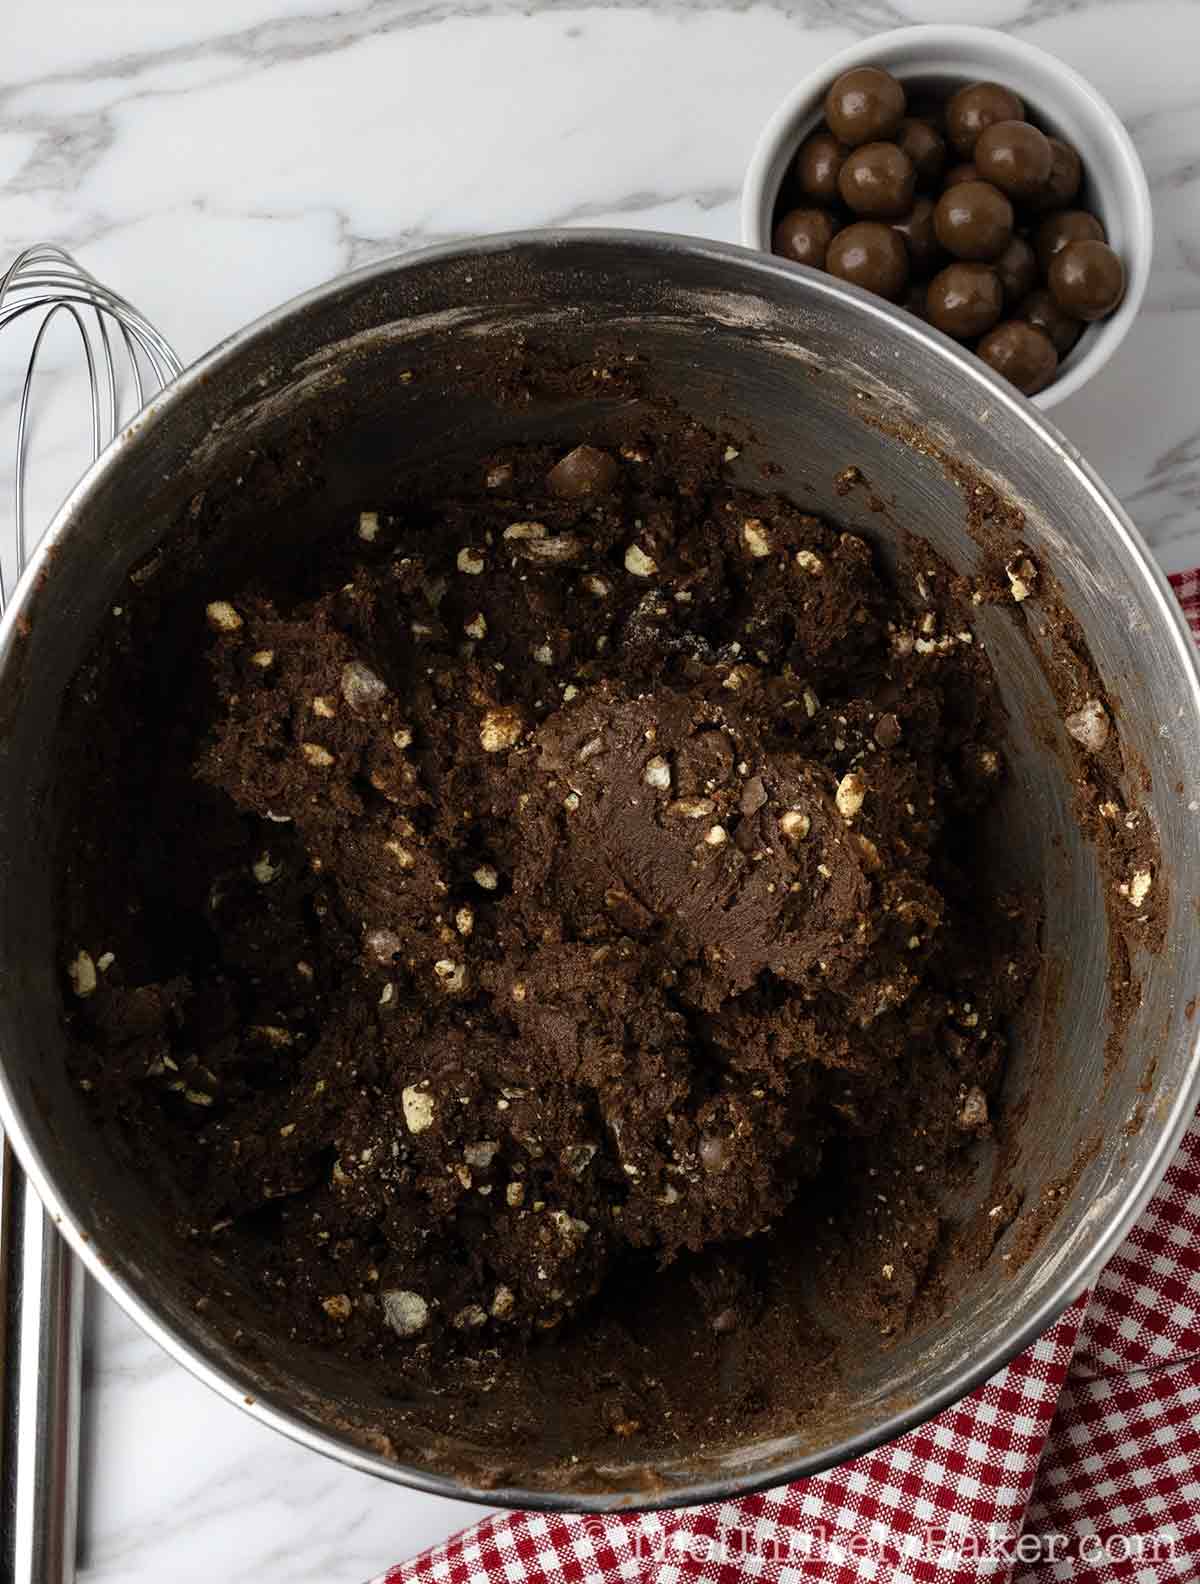 Ovaltine malt chocolate cookie dough in a bowl.